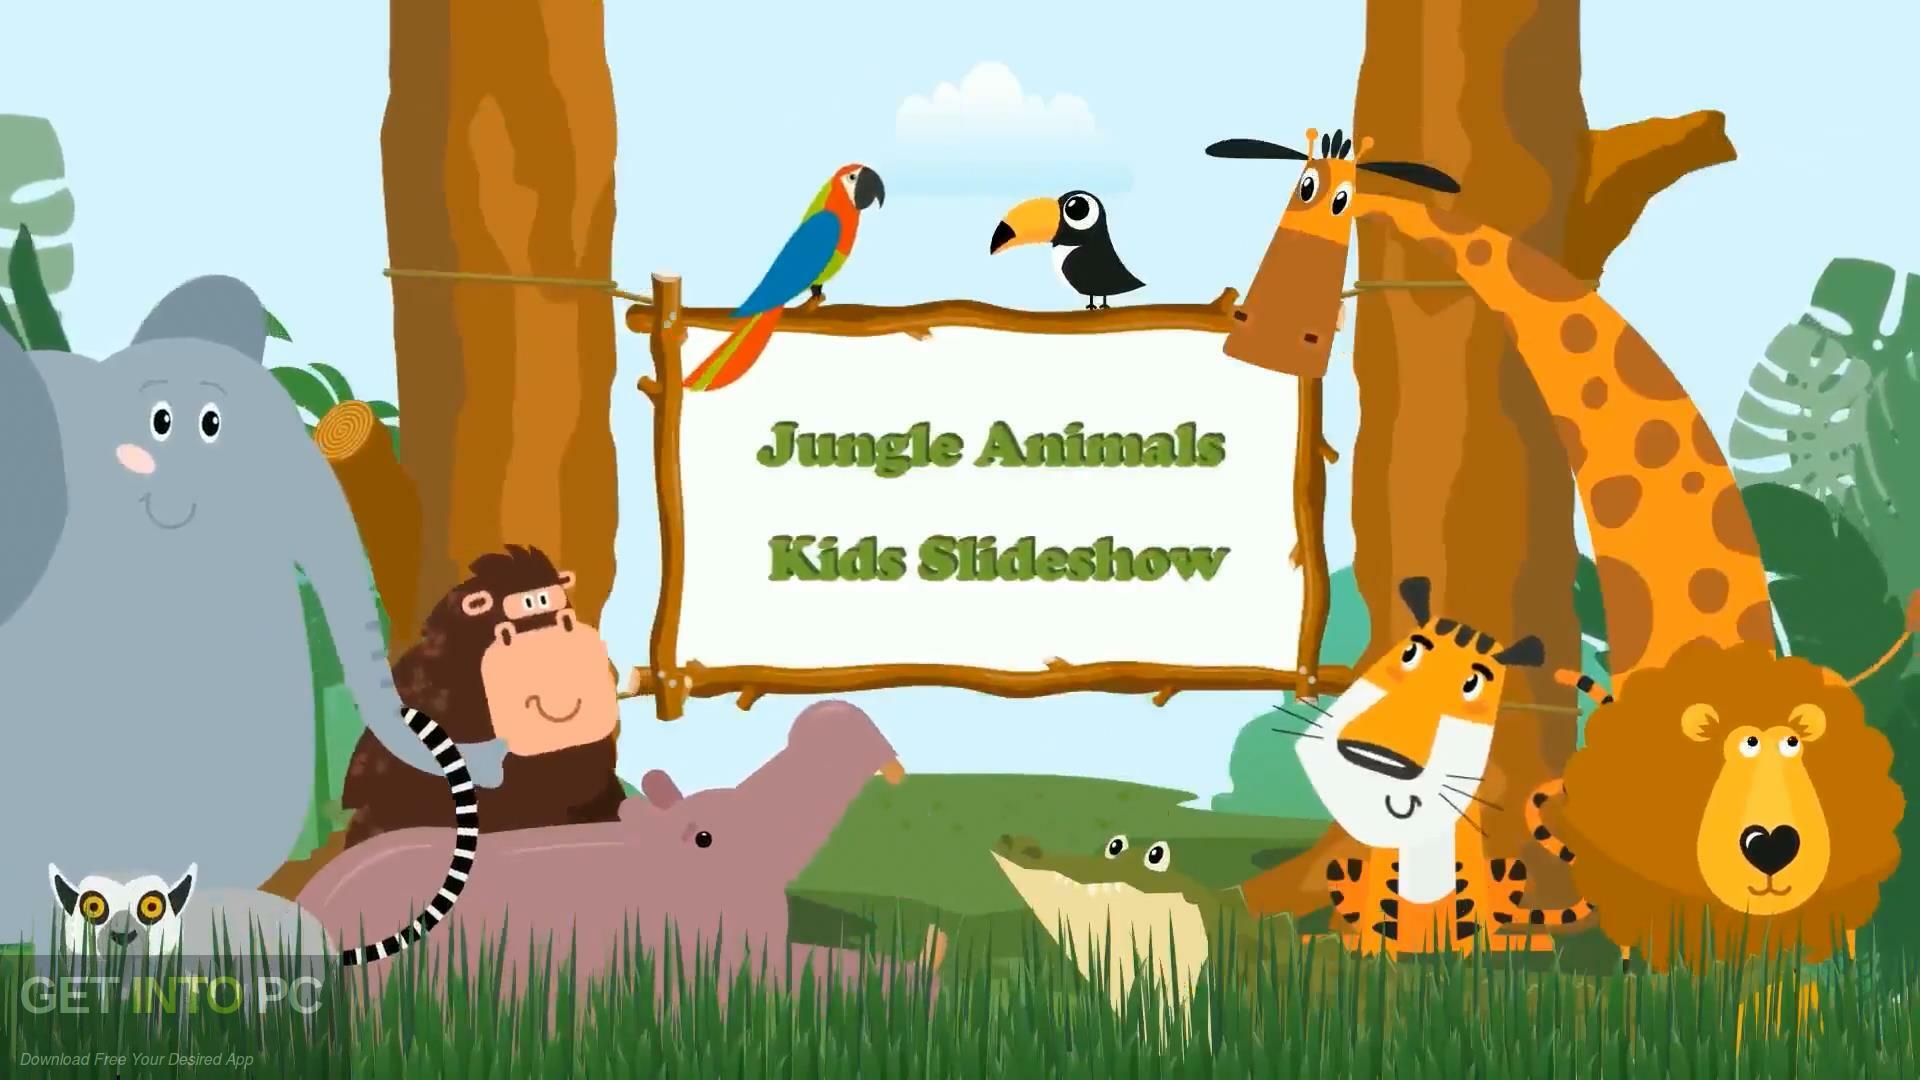 VideoHive - Jungle Animals Kids Slideshow [AEP] Download